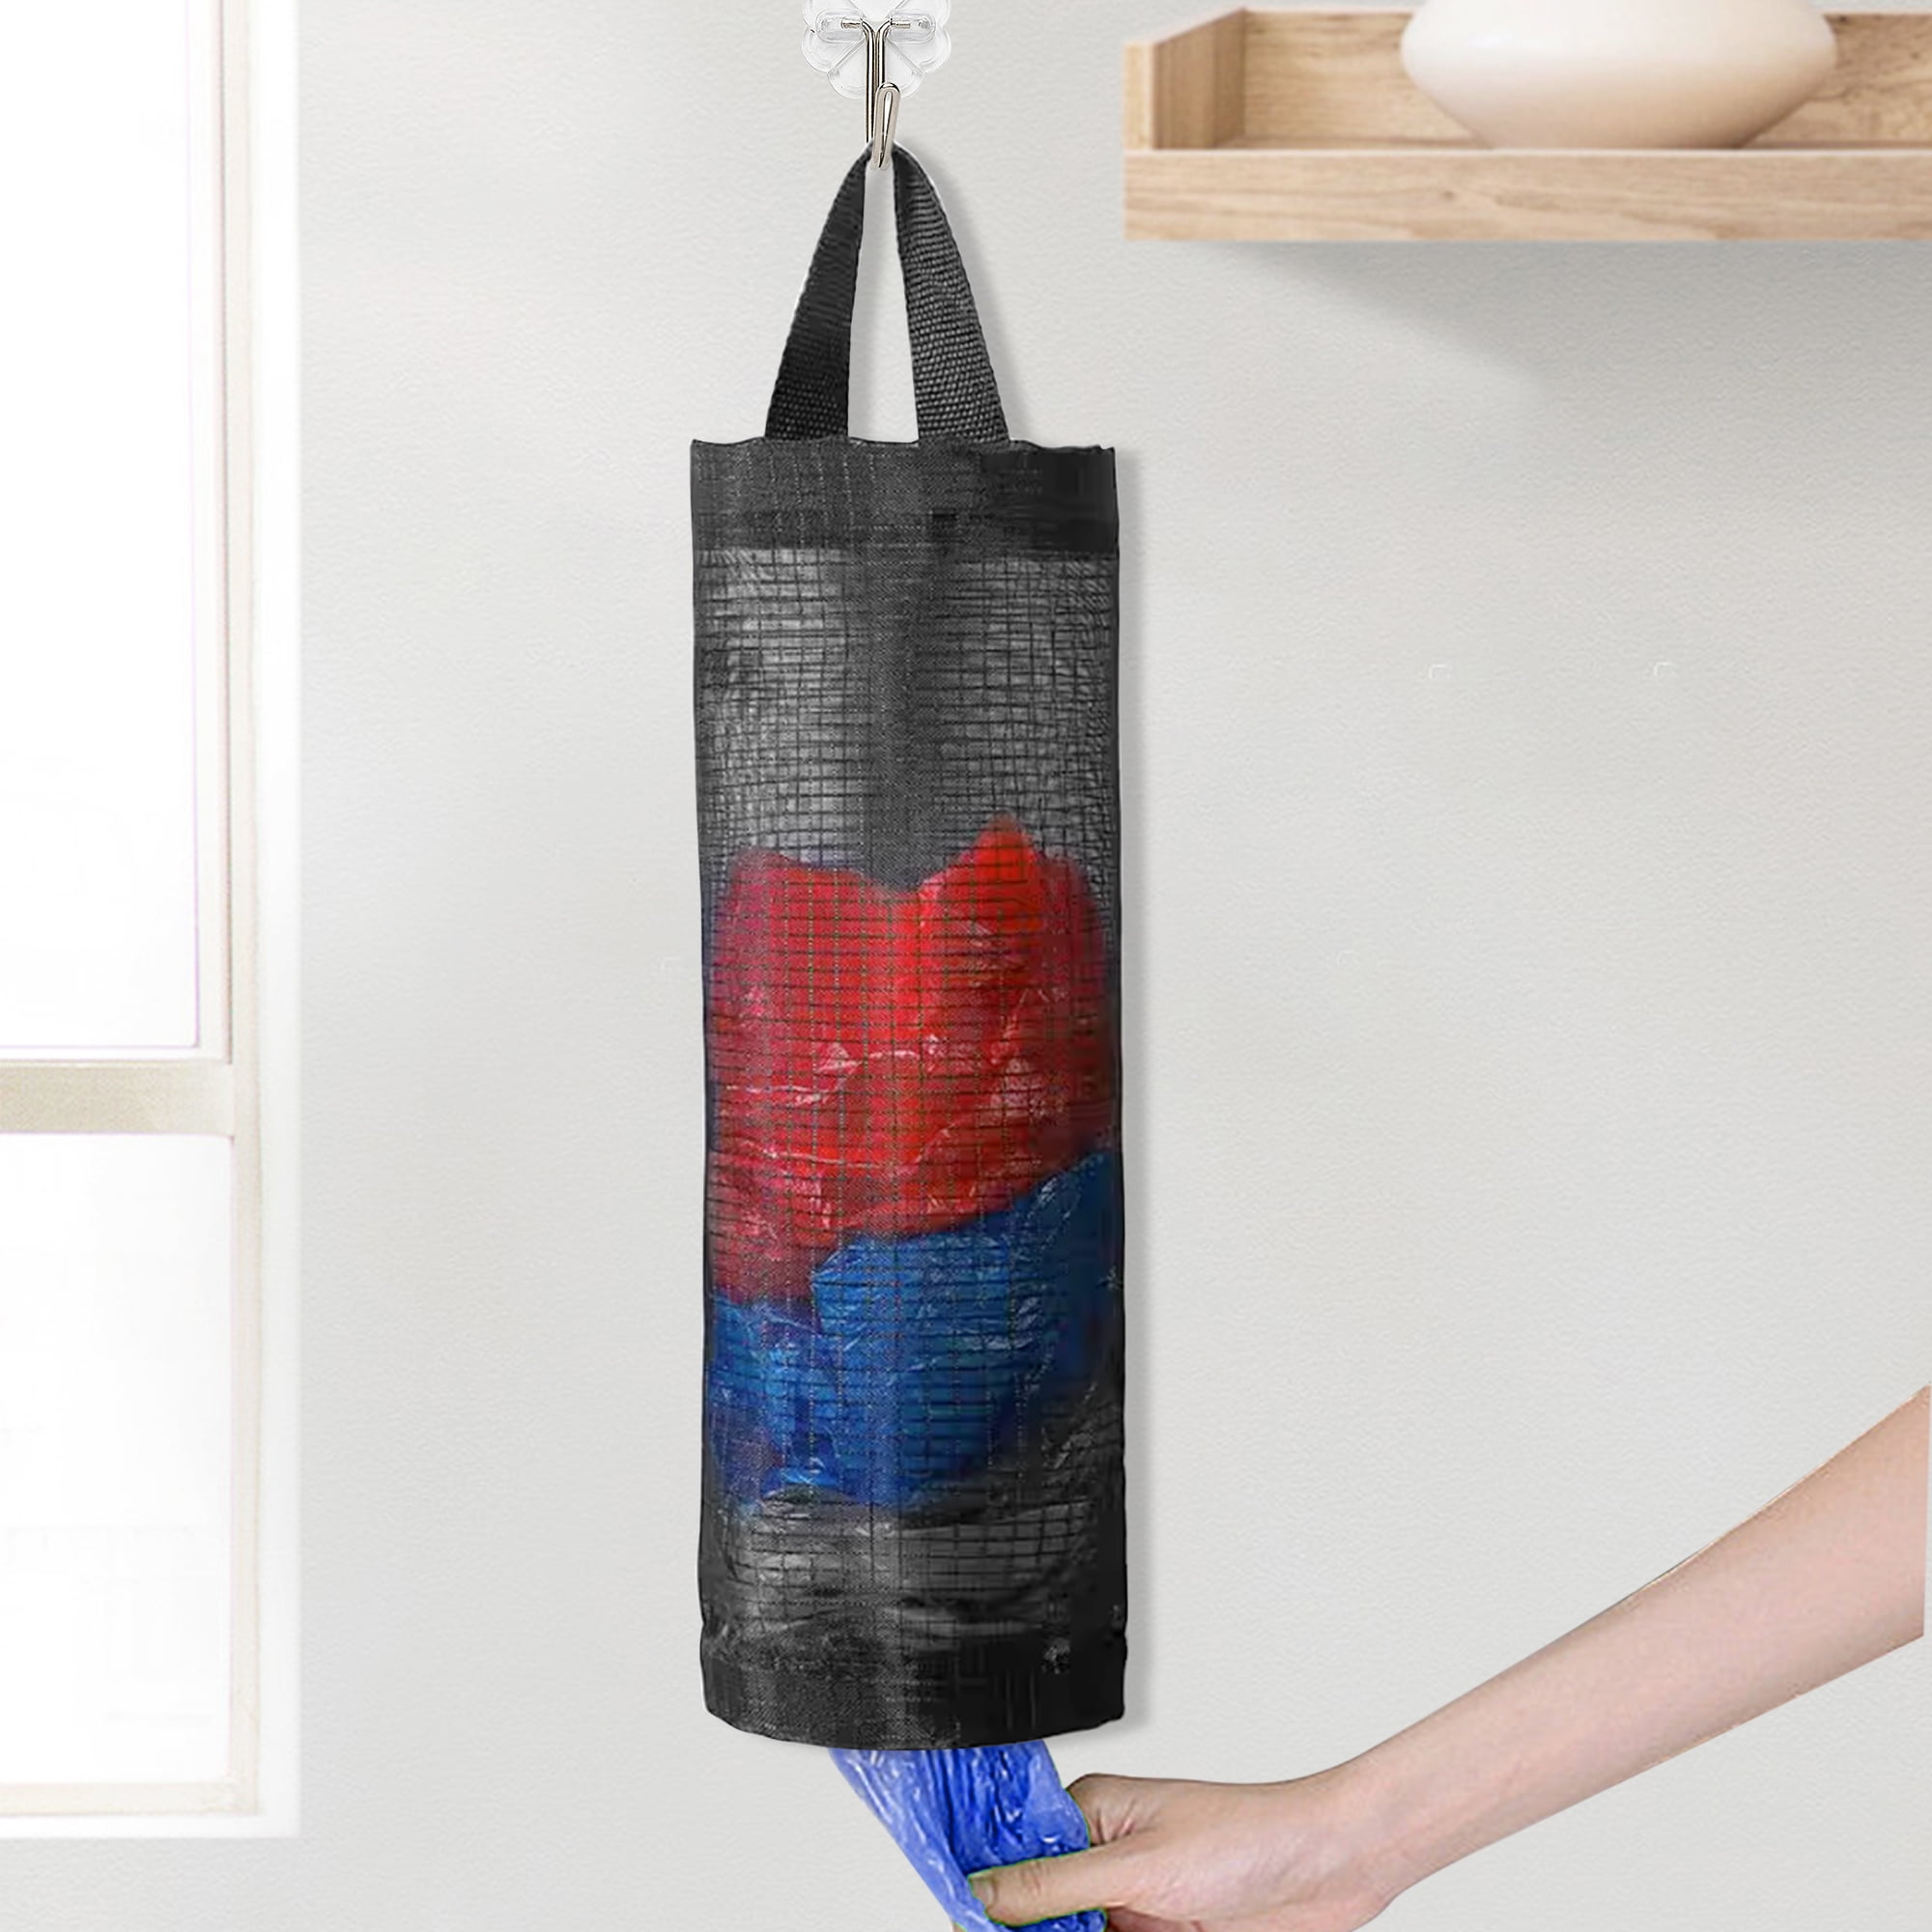 Jiallo Plastic/Grocery Bag Holder - Bed Bath & Beyond - 29747943